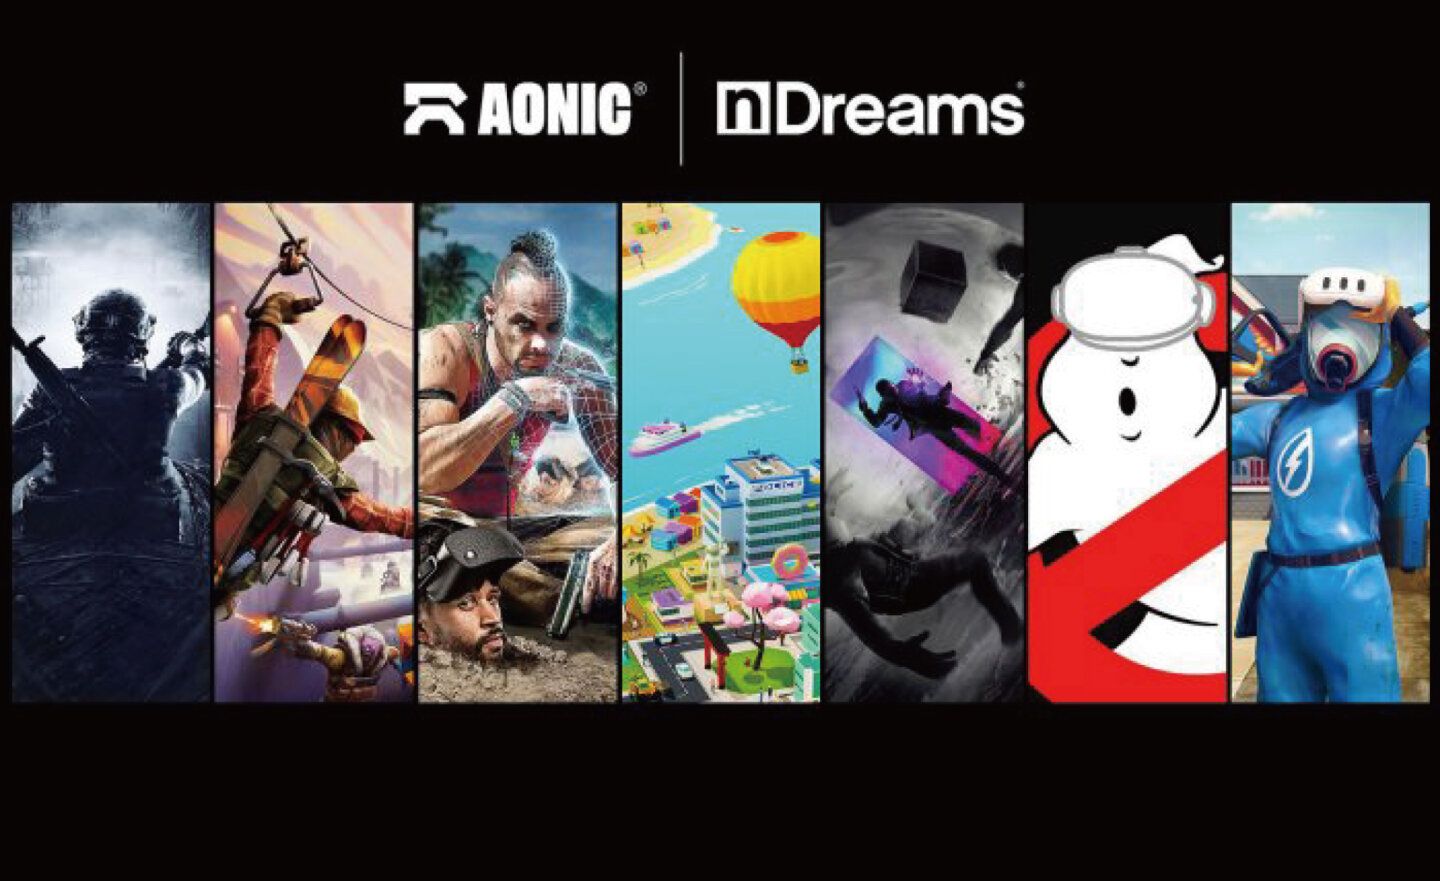 VR 遊戲工作室 nDreams 以 1.1 億美元被 Aonic 收購